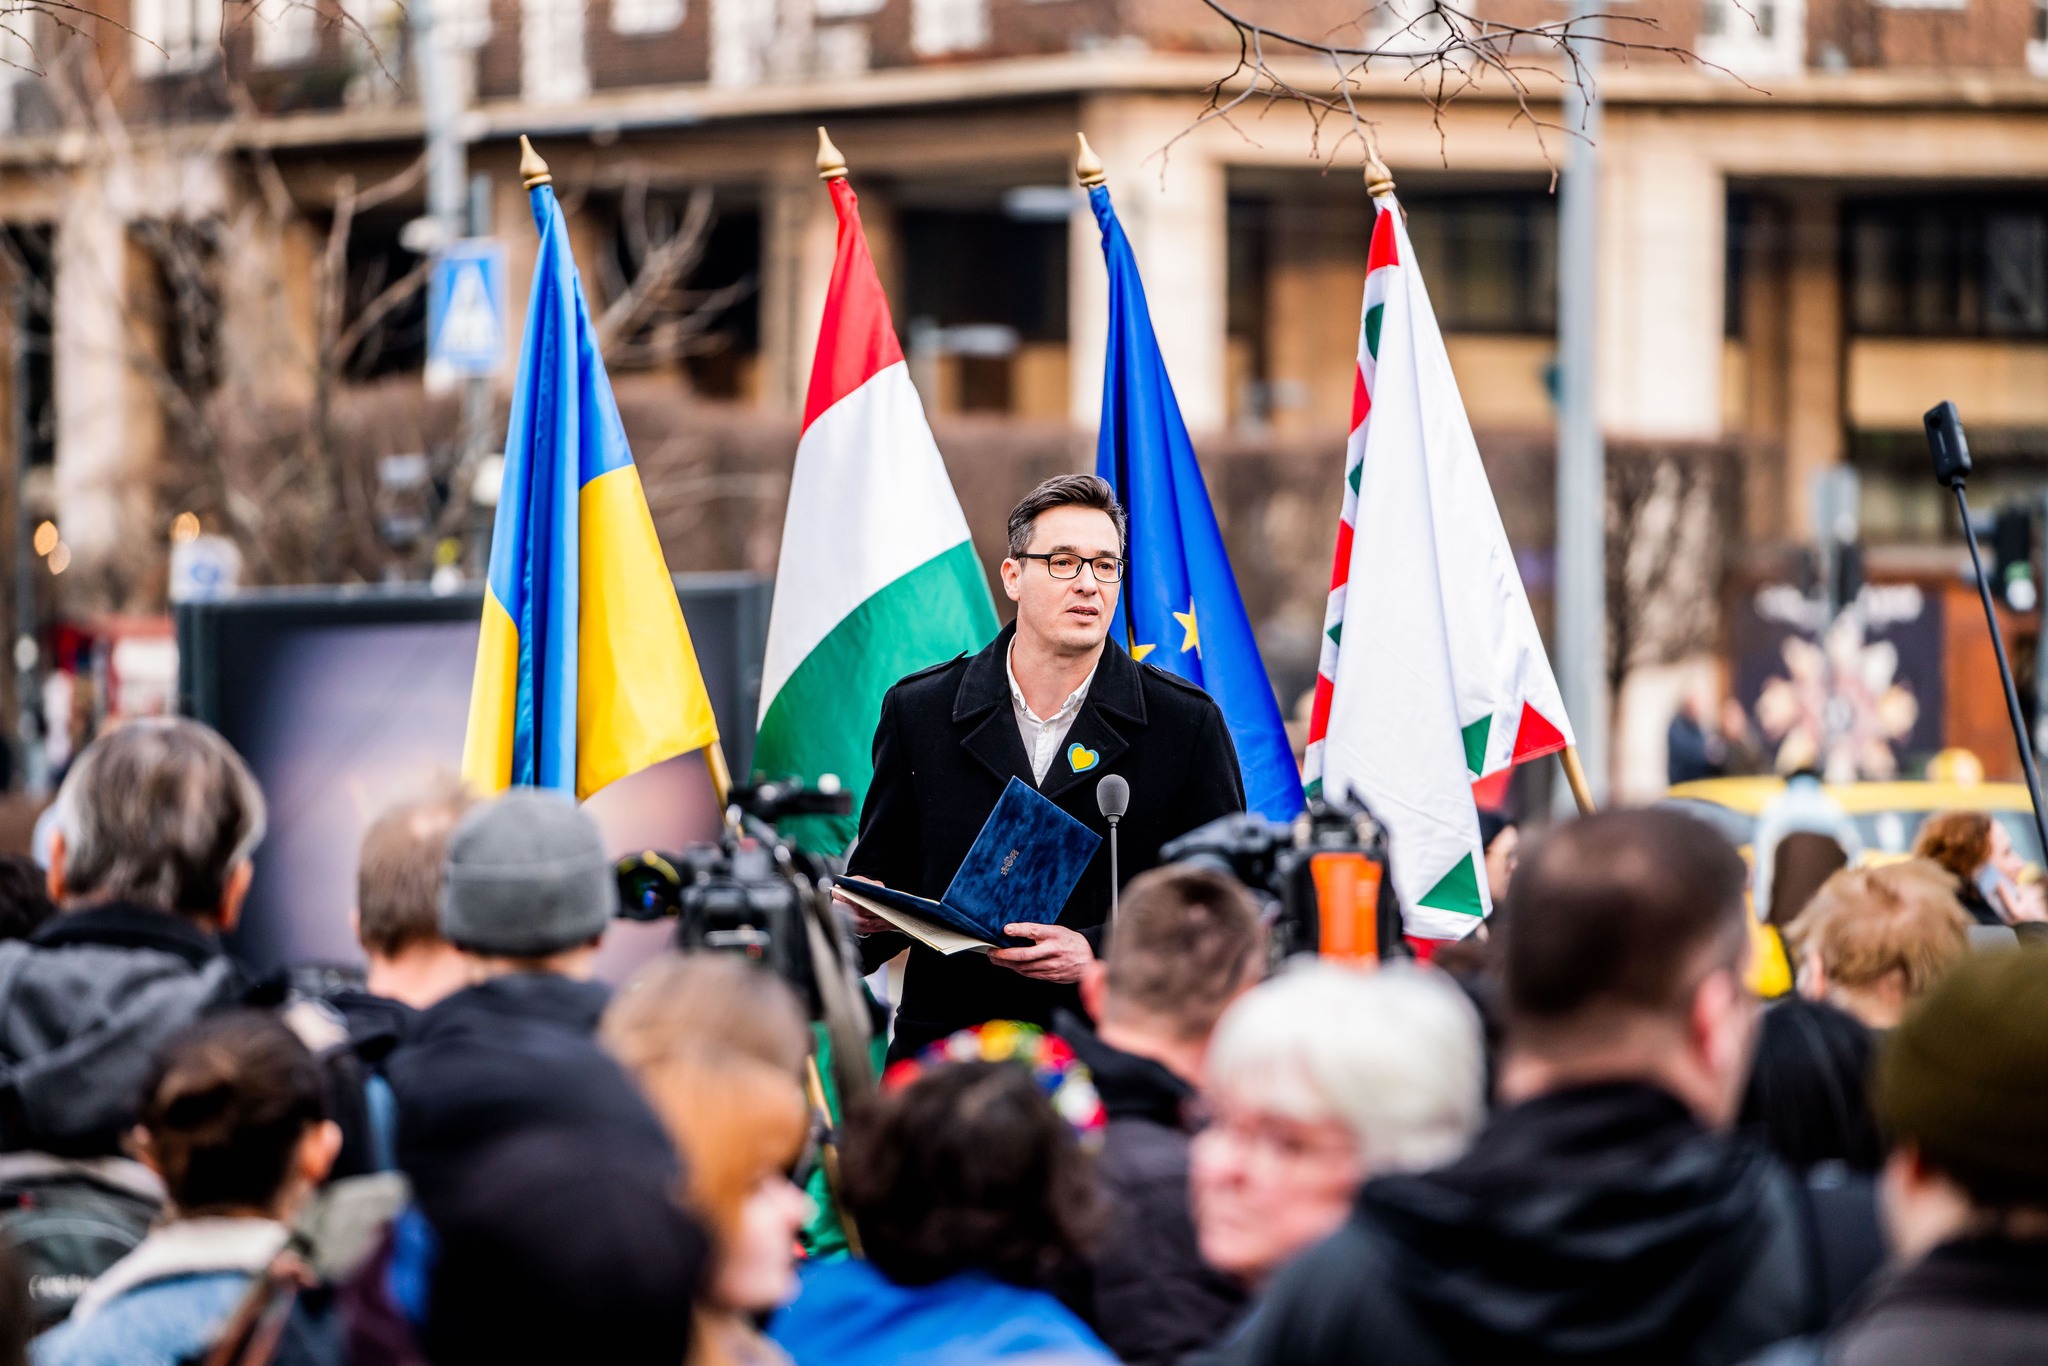 City Mayor: 'Budapest Standing by Ukraine, Solidarity, Peace'